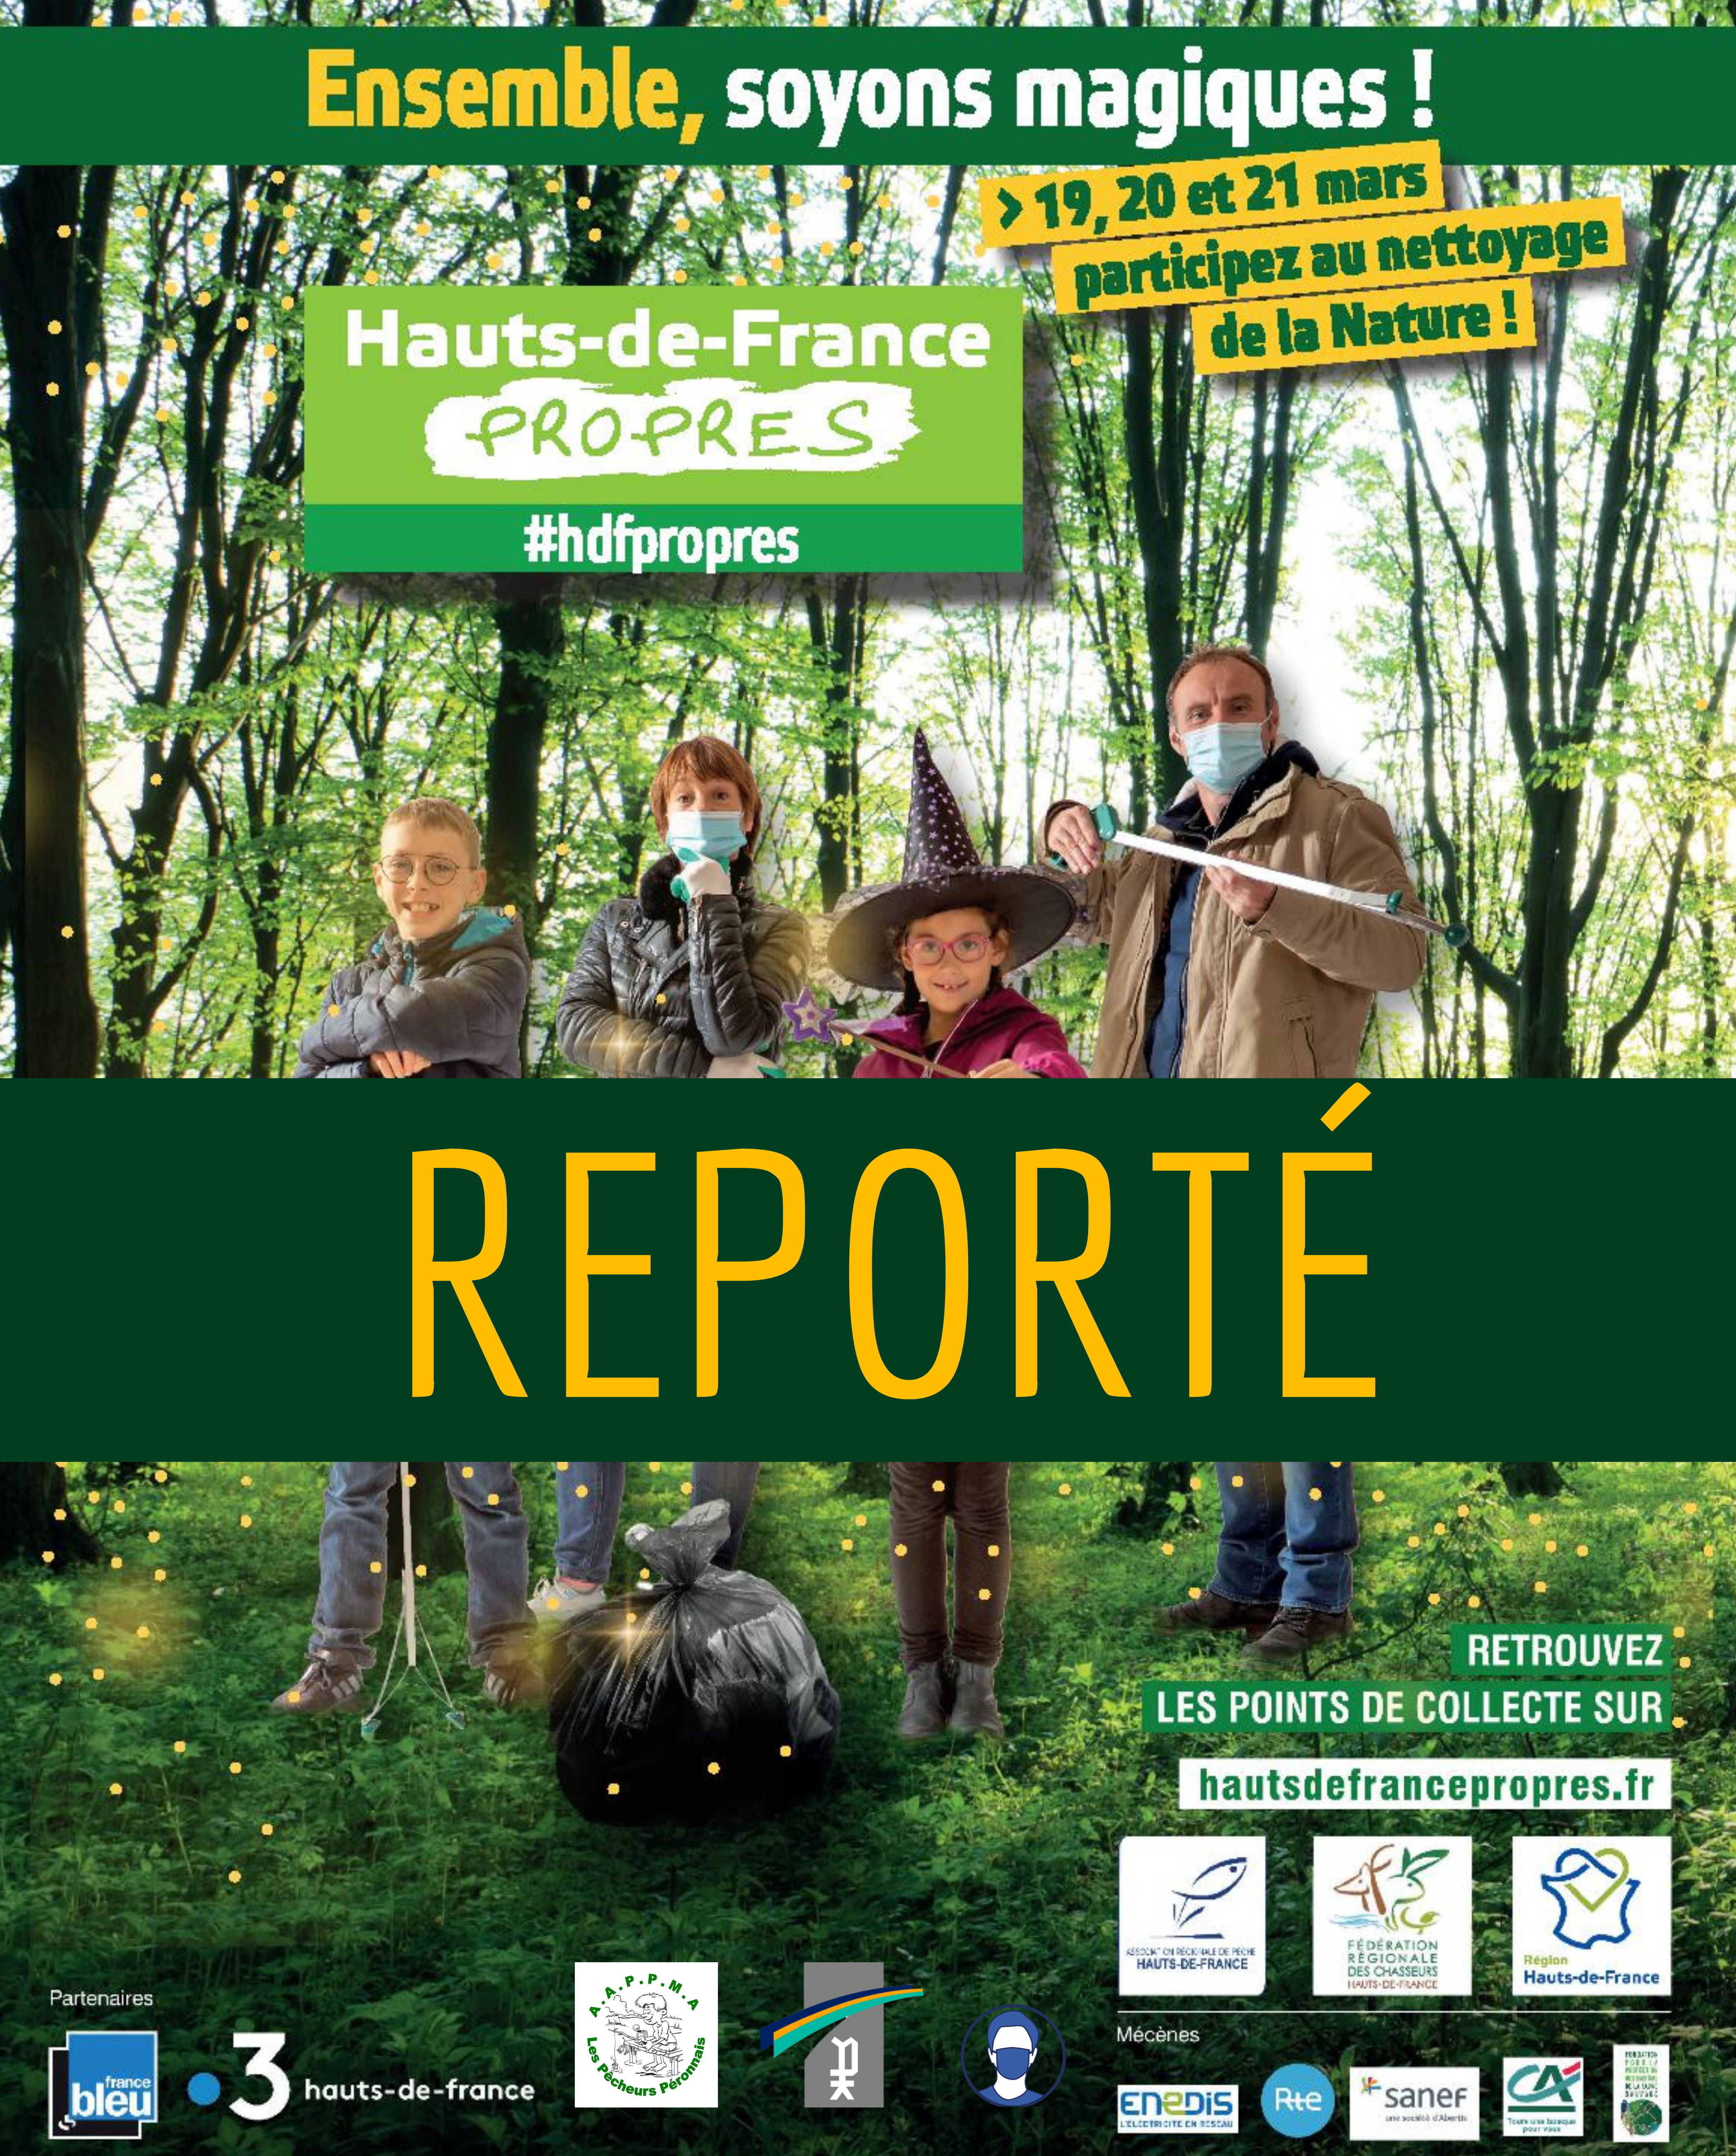 HDF Propres report.png